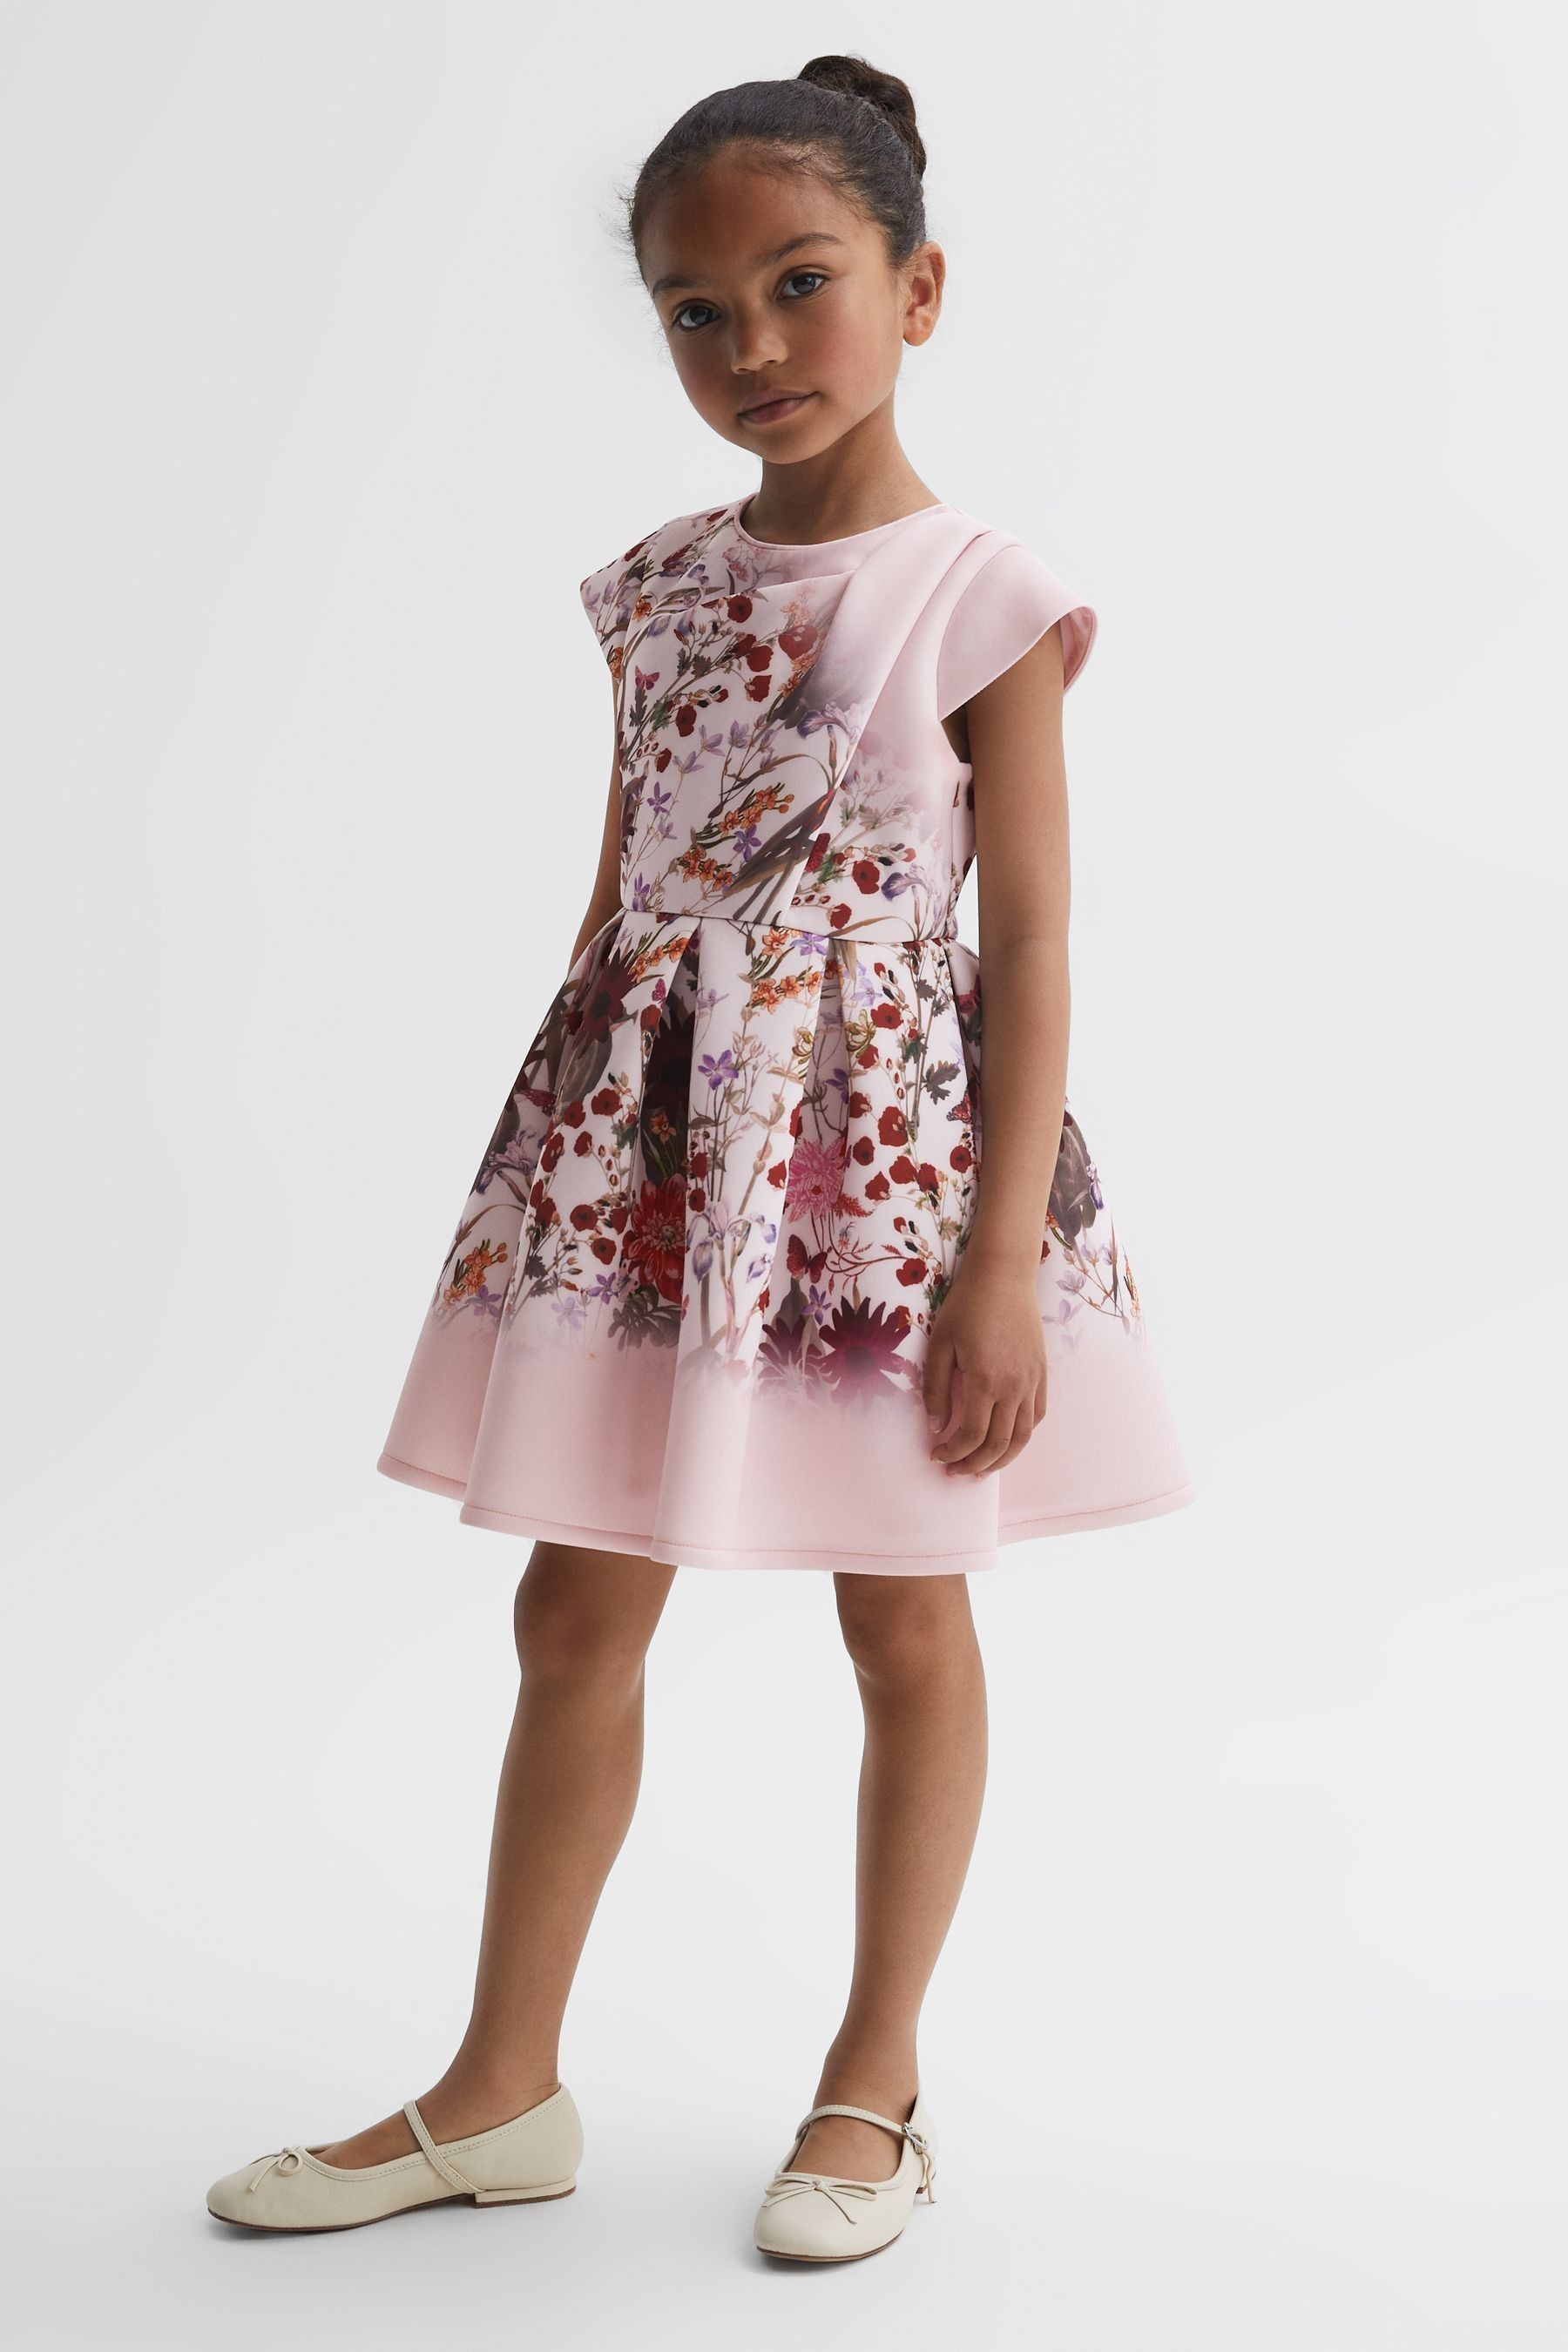 Reiss Kids' Tammy - Multi Junior Scuba Floral Printed Dress, 8 - 9 Years